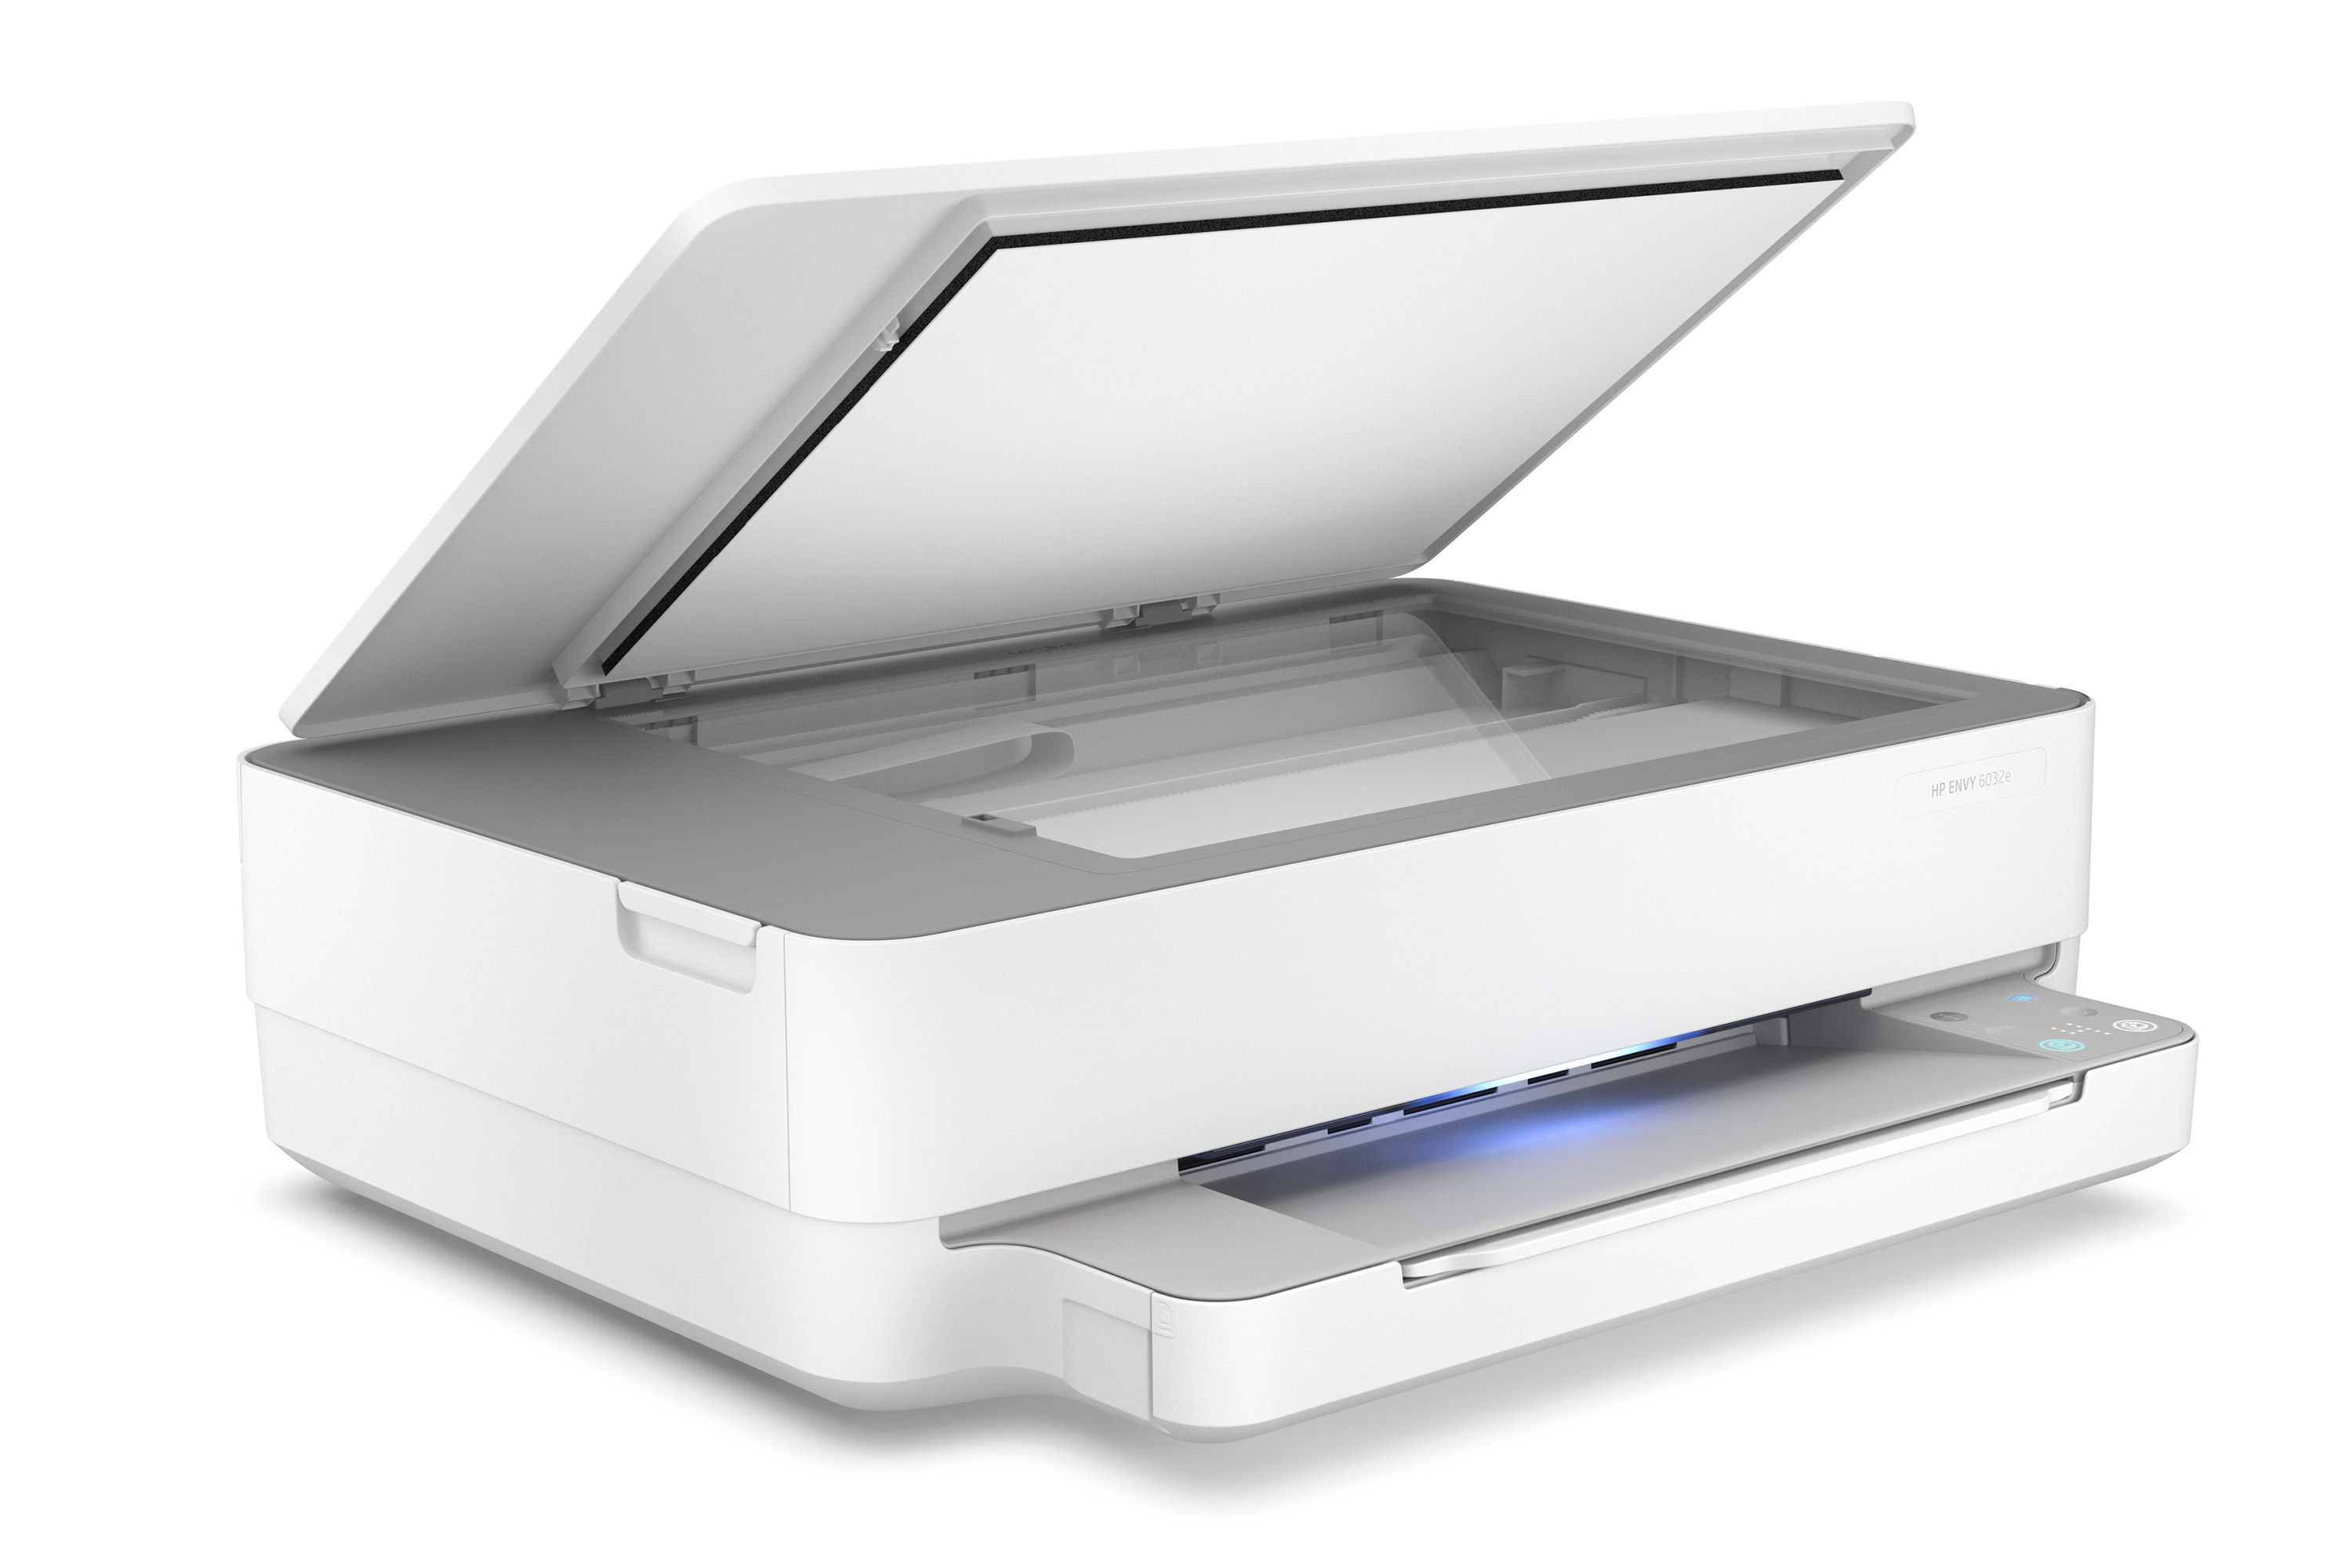 HP Envy 6032e printer on a white background